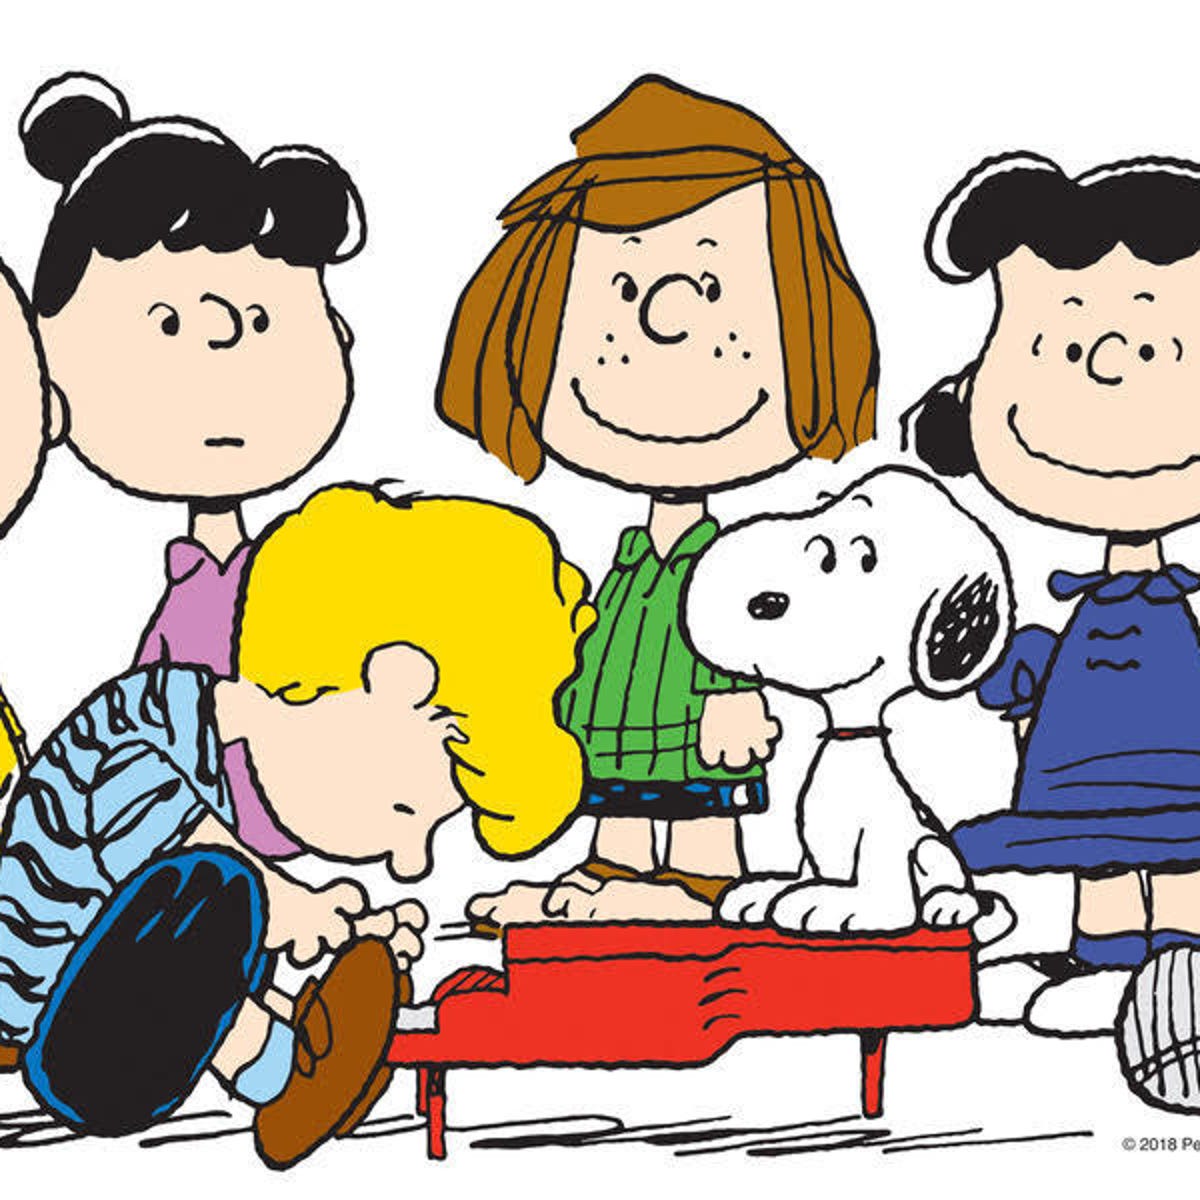 Apple bringing back Charlie Brown, Snoopy as part of new Peanuts series -  CNET